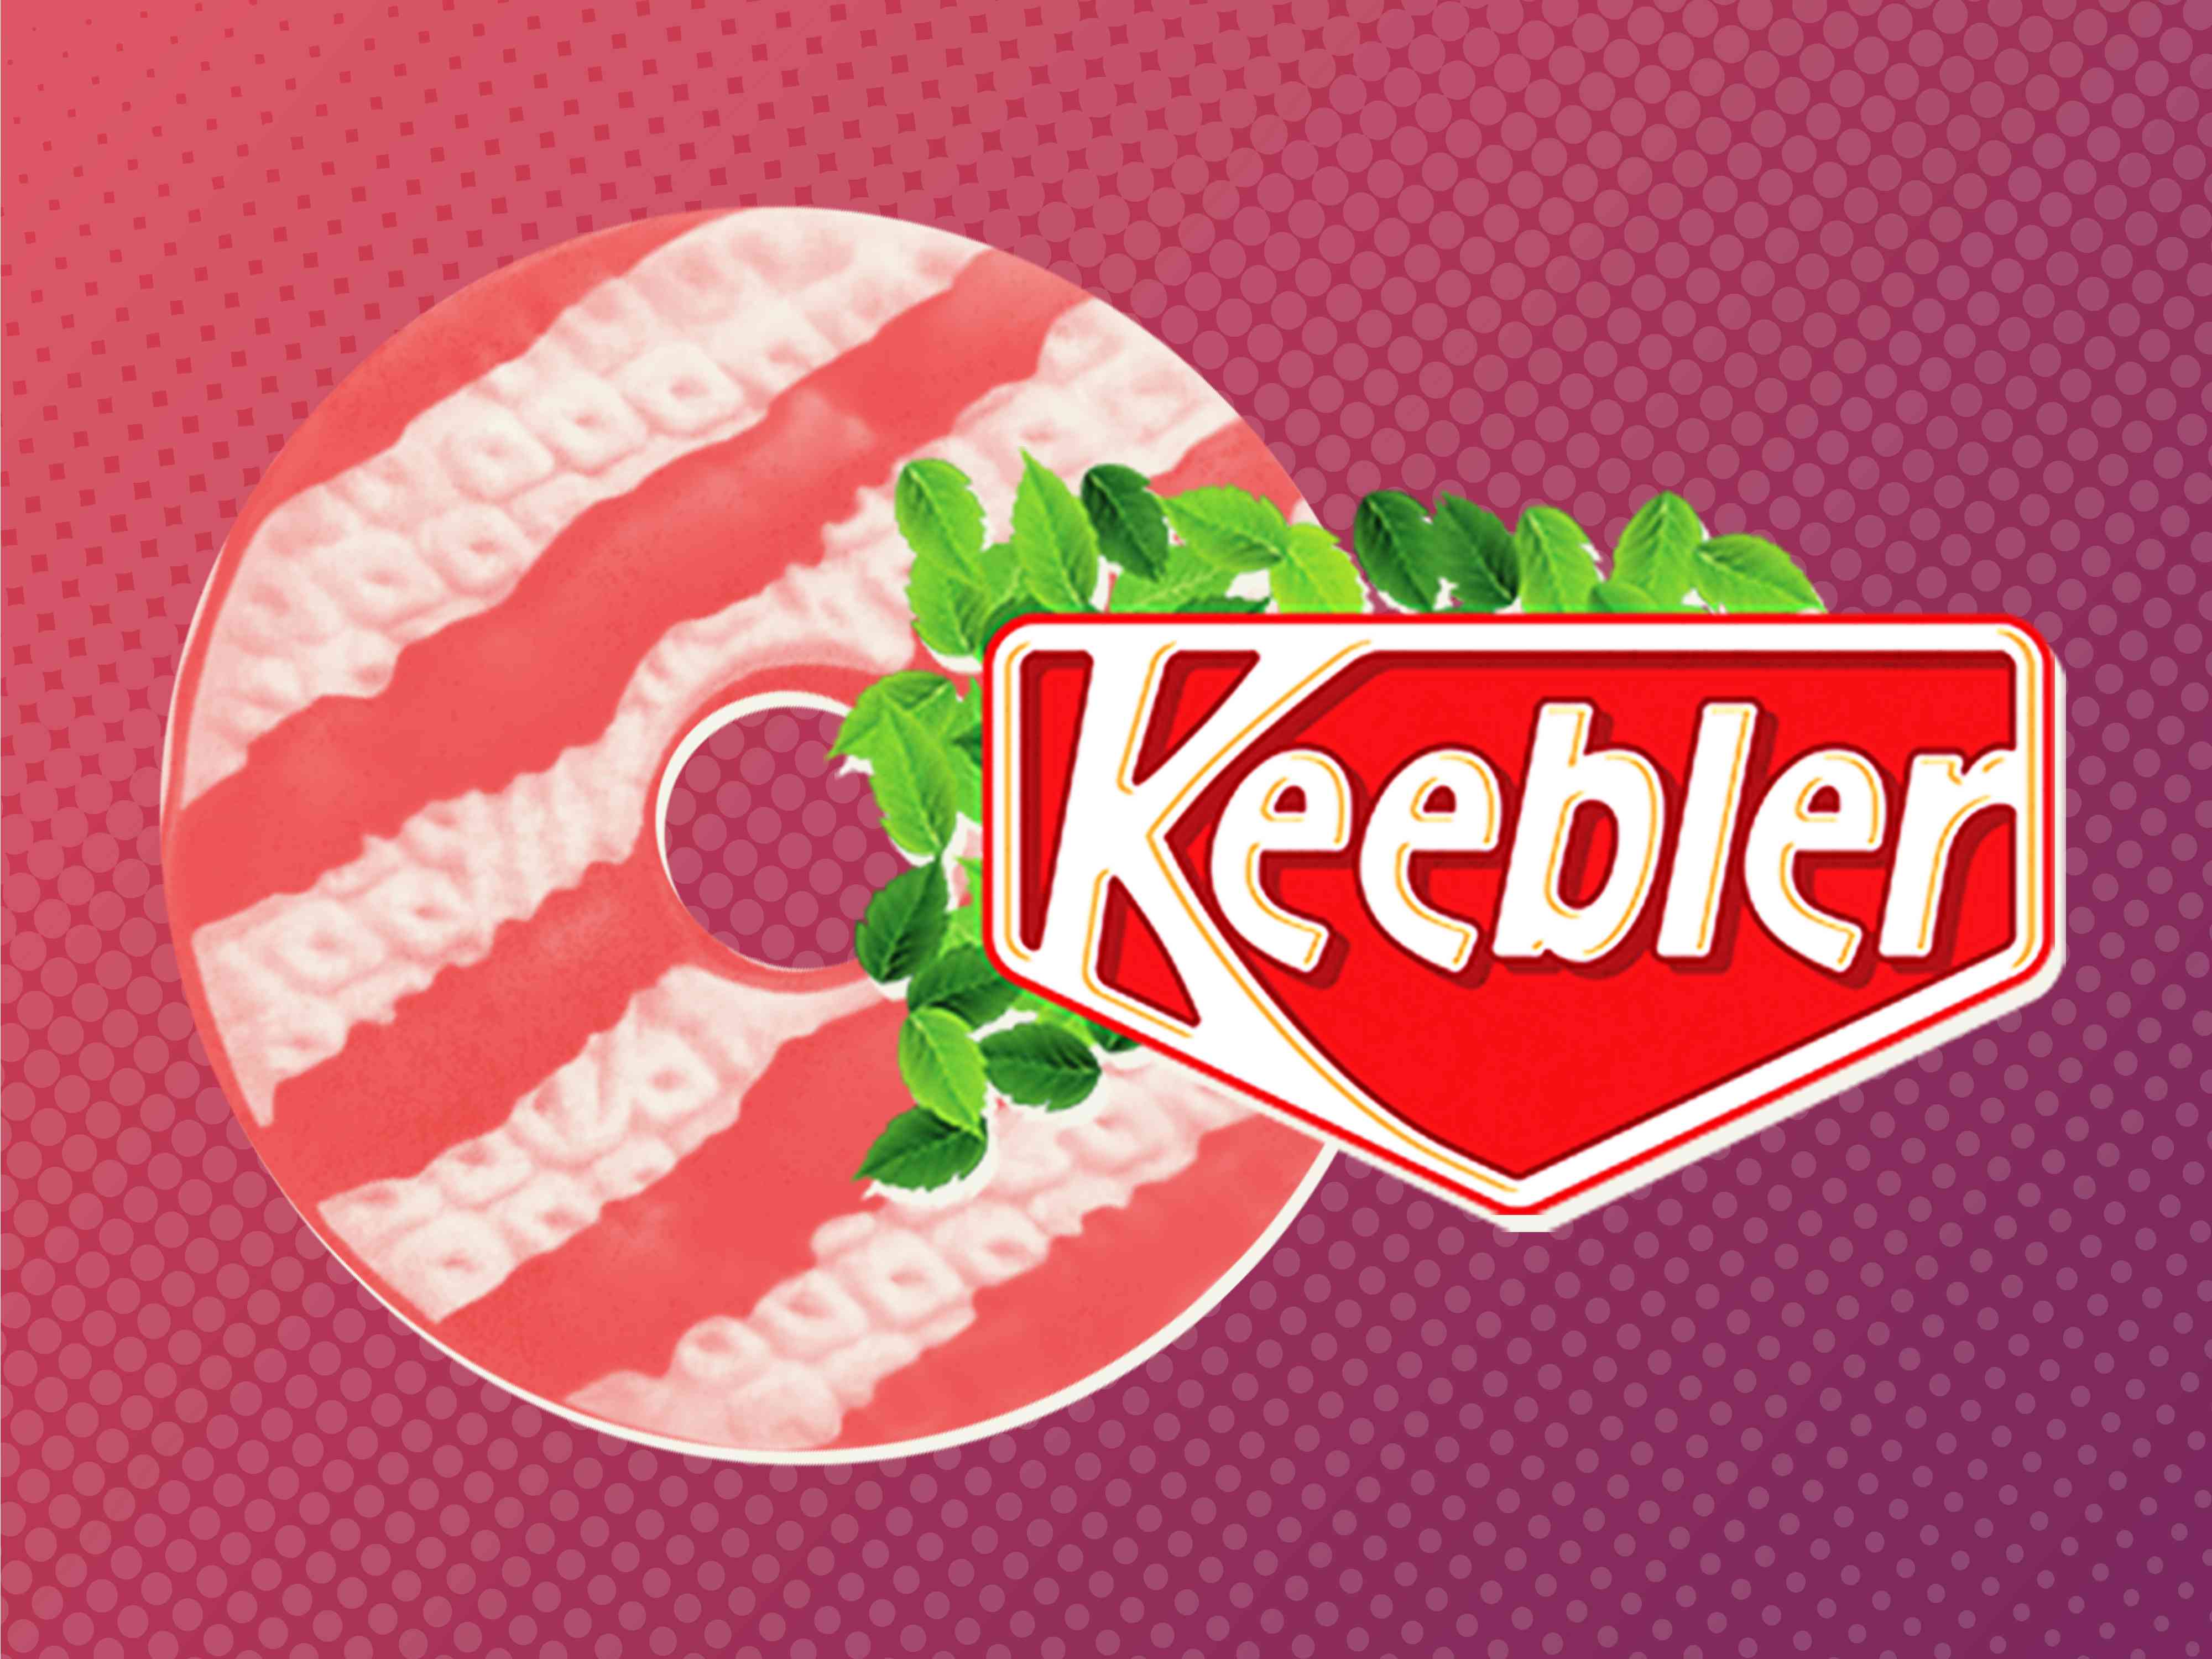 Keebler Is Bringing Back the Fudgiest Fudge Stripe Flavor for a Limited Time